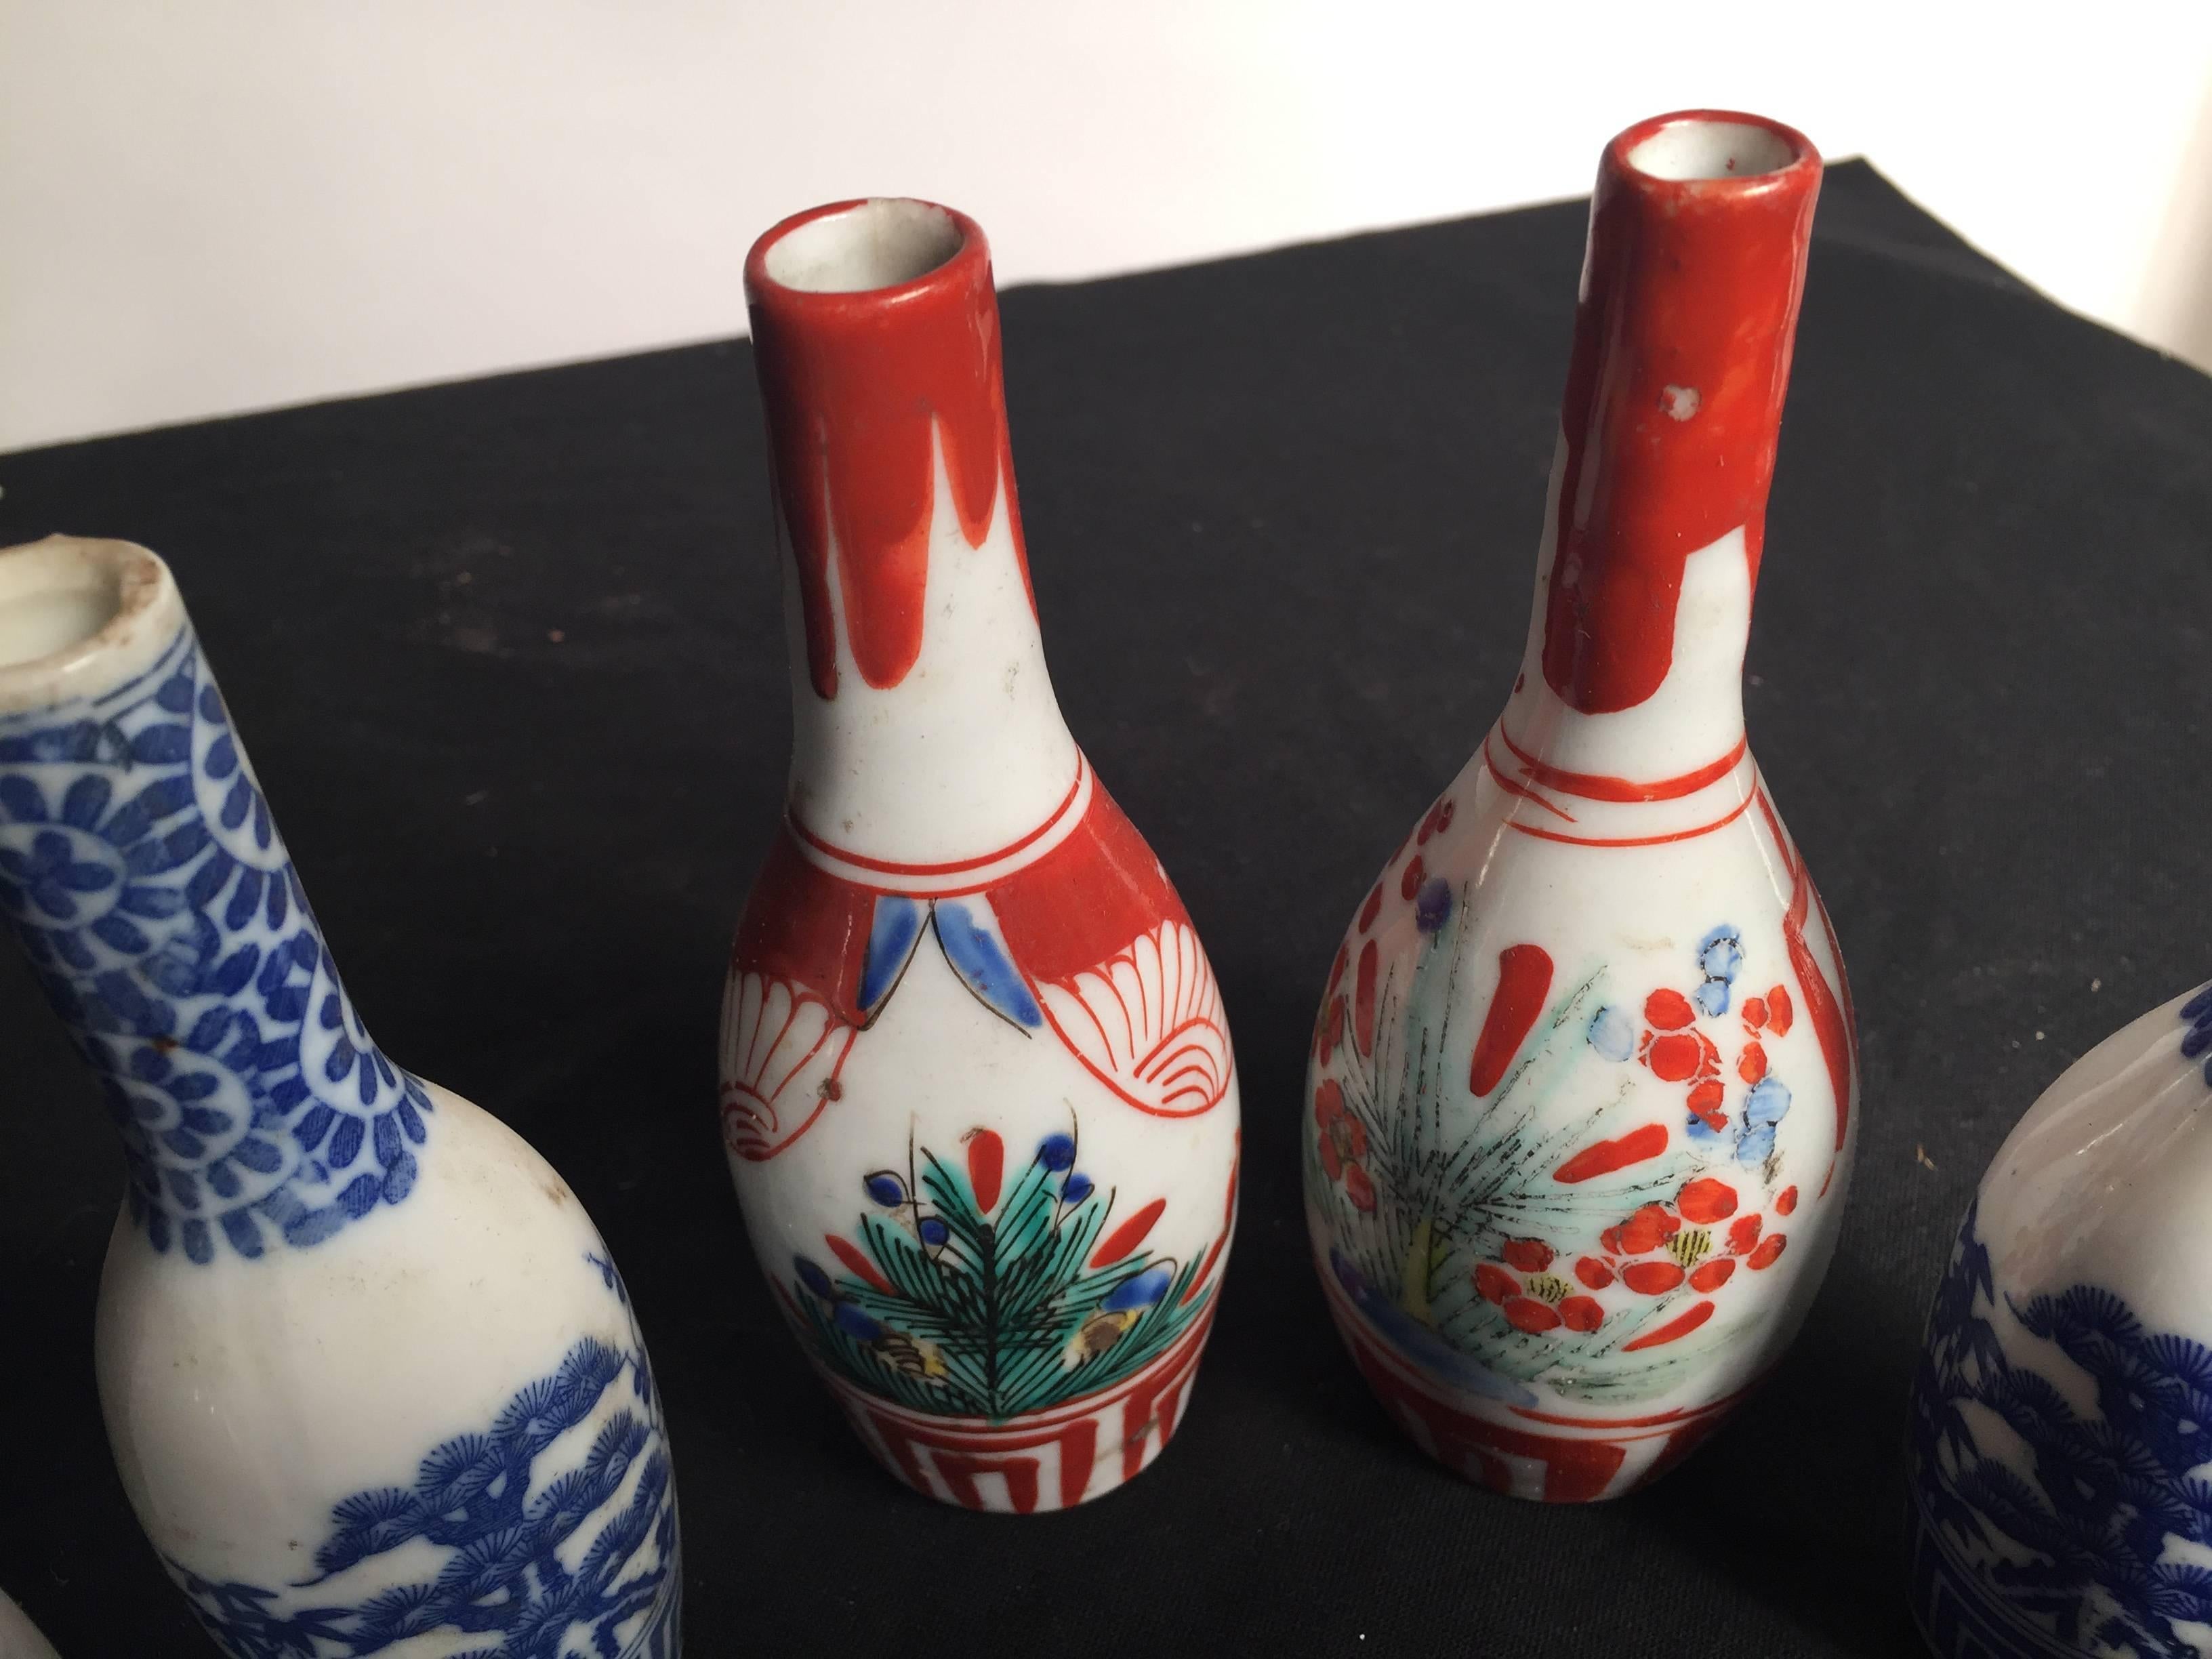 Glazed Japanese Antique Hand-Painted Ceramic Sake Bottles Collection, 19th Century